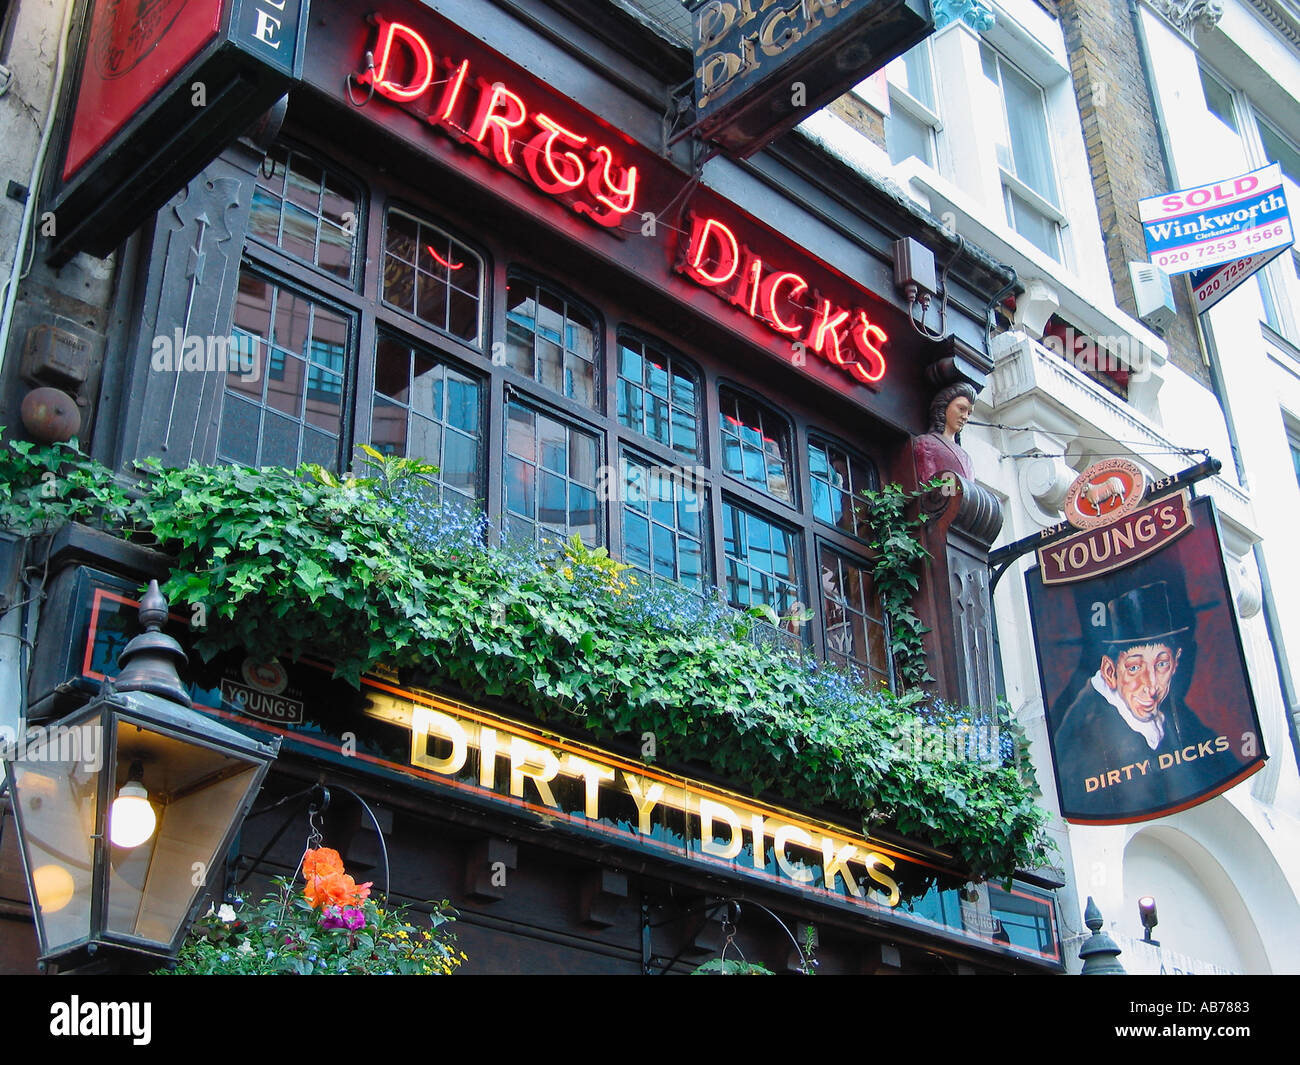 Dirty Dicks, London Pubs and Bar Signs, Bishopsgate, Spitalfields, London, United Kingdom Stock Photo